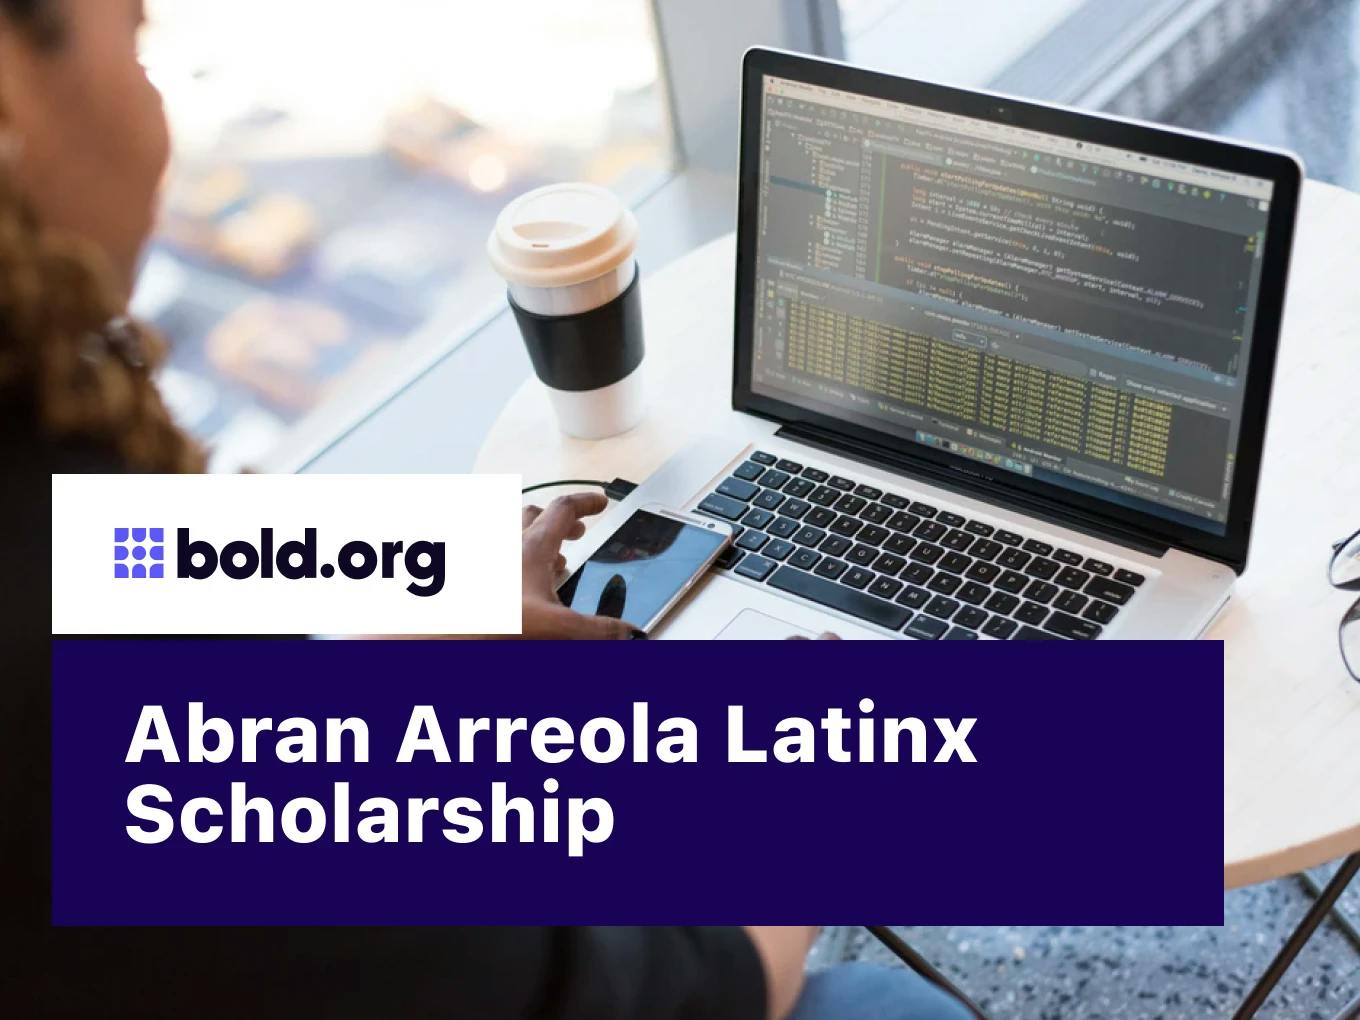 Abran Arreola Latinx Scholarship